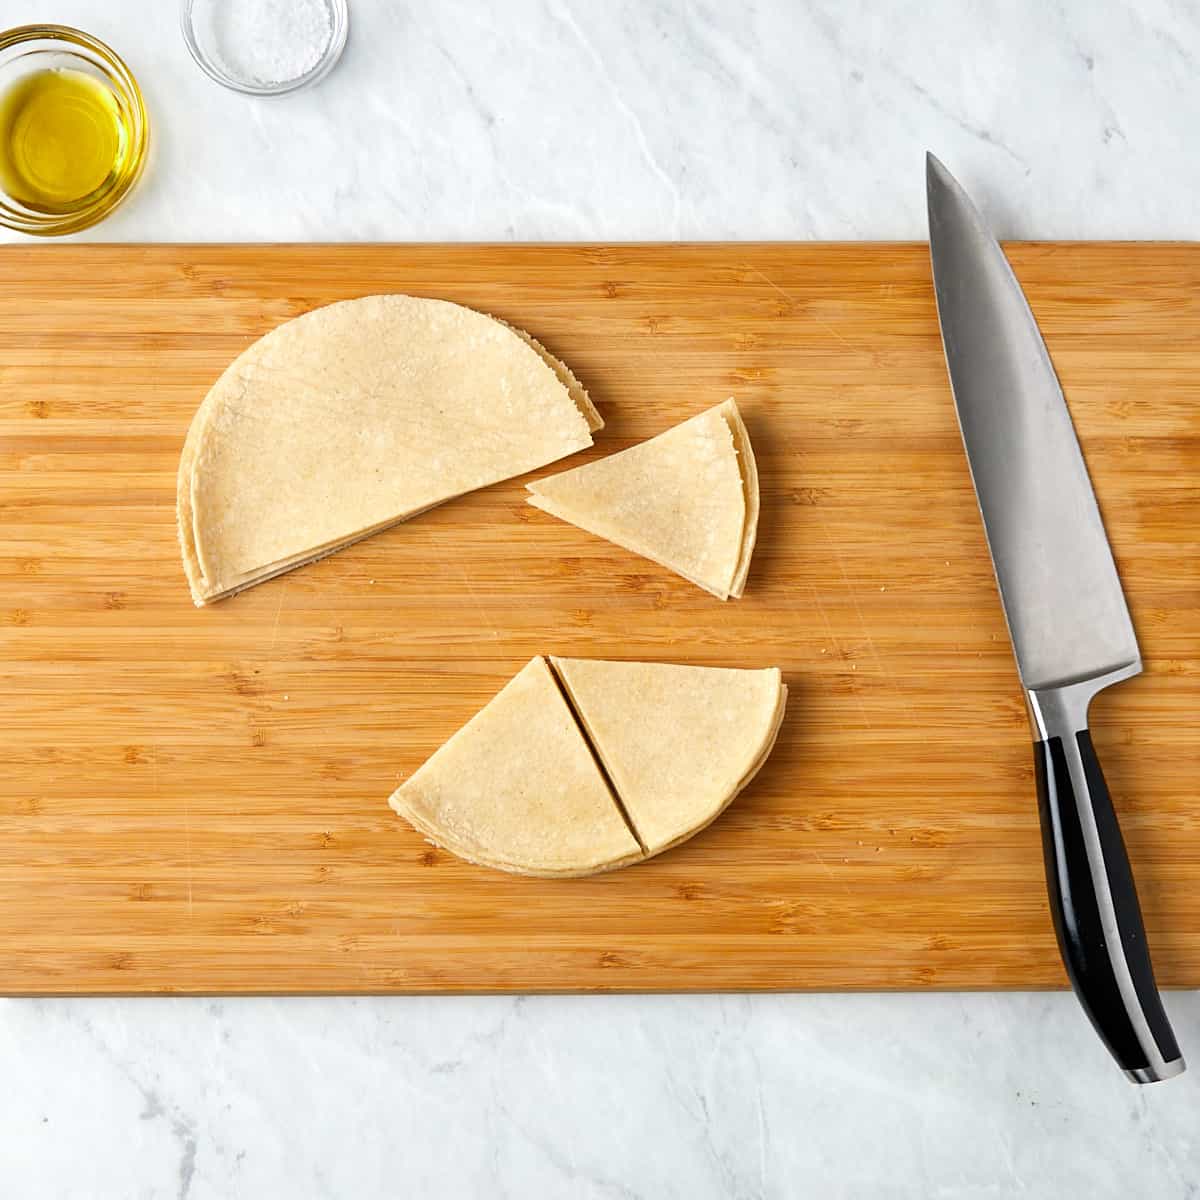 tortillas being cut into 6 triangular wedges on a wooden cutting board.